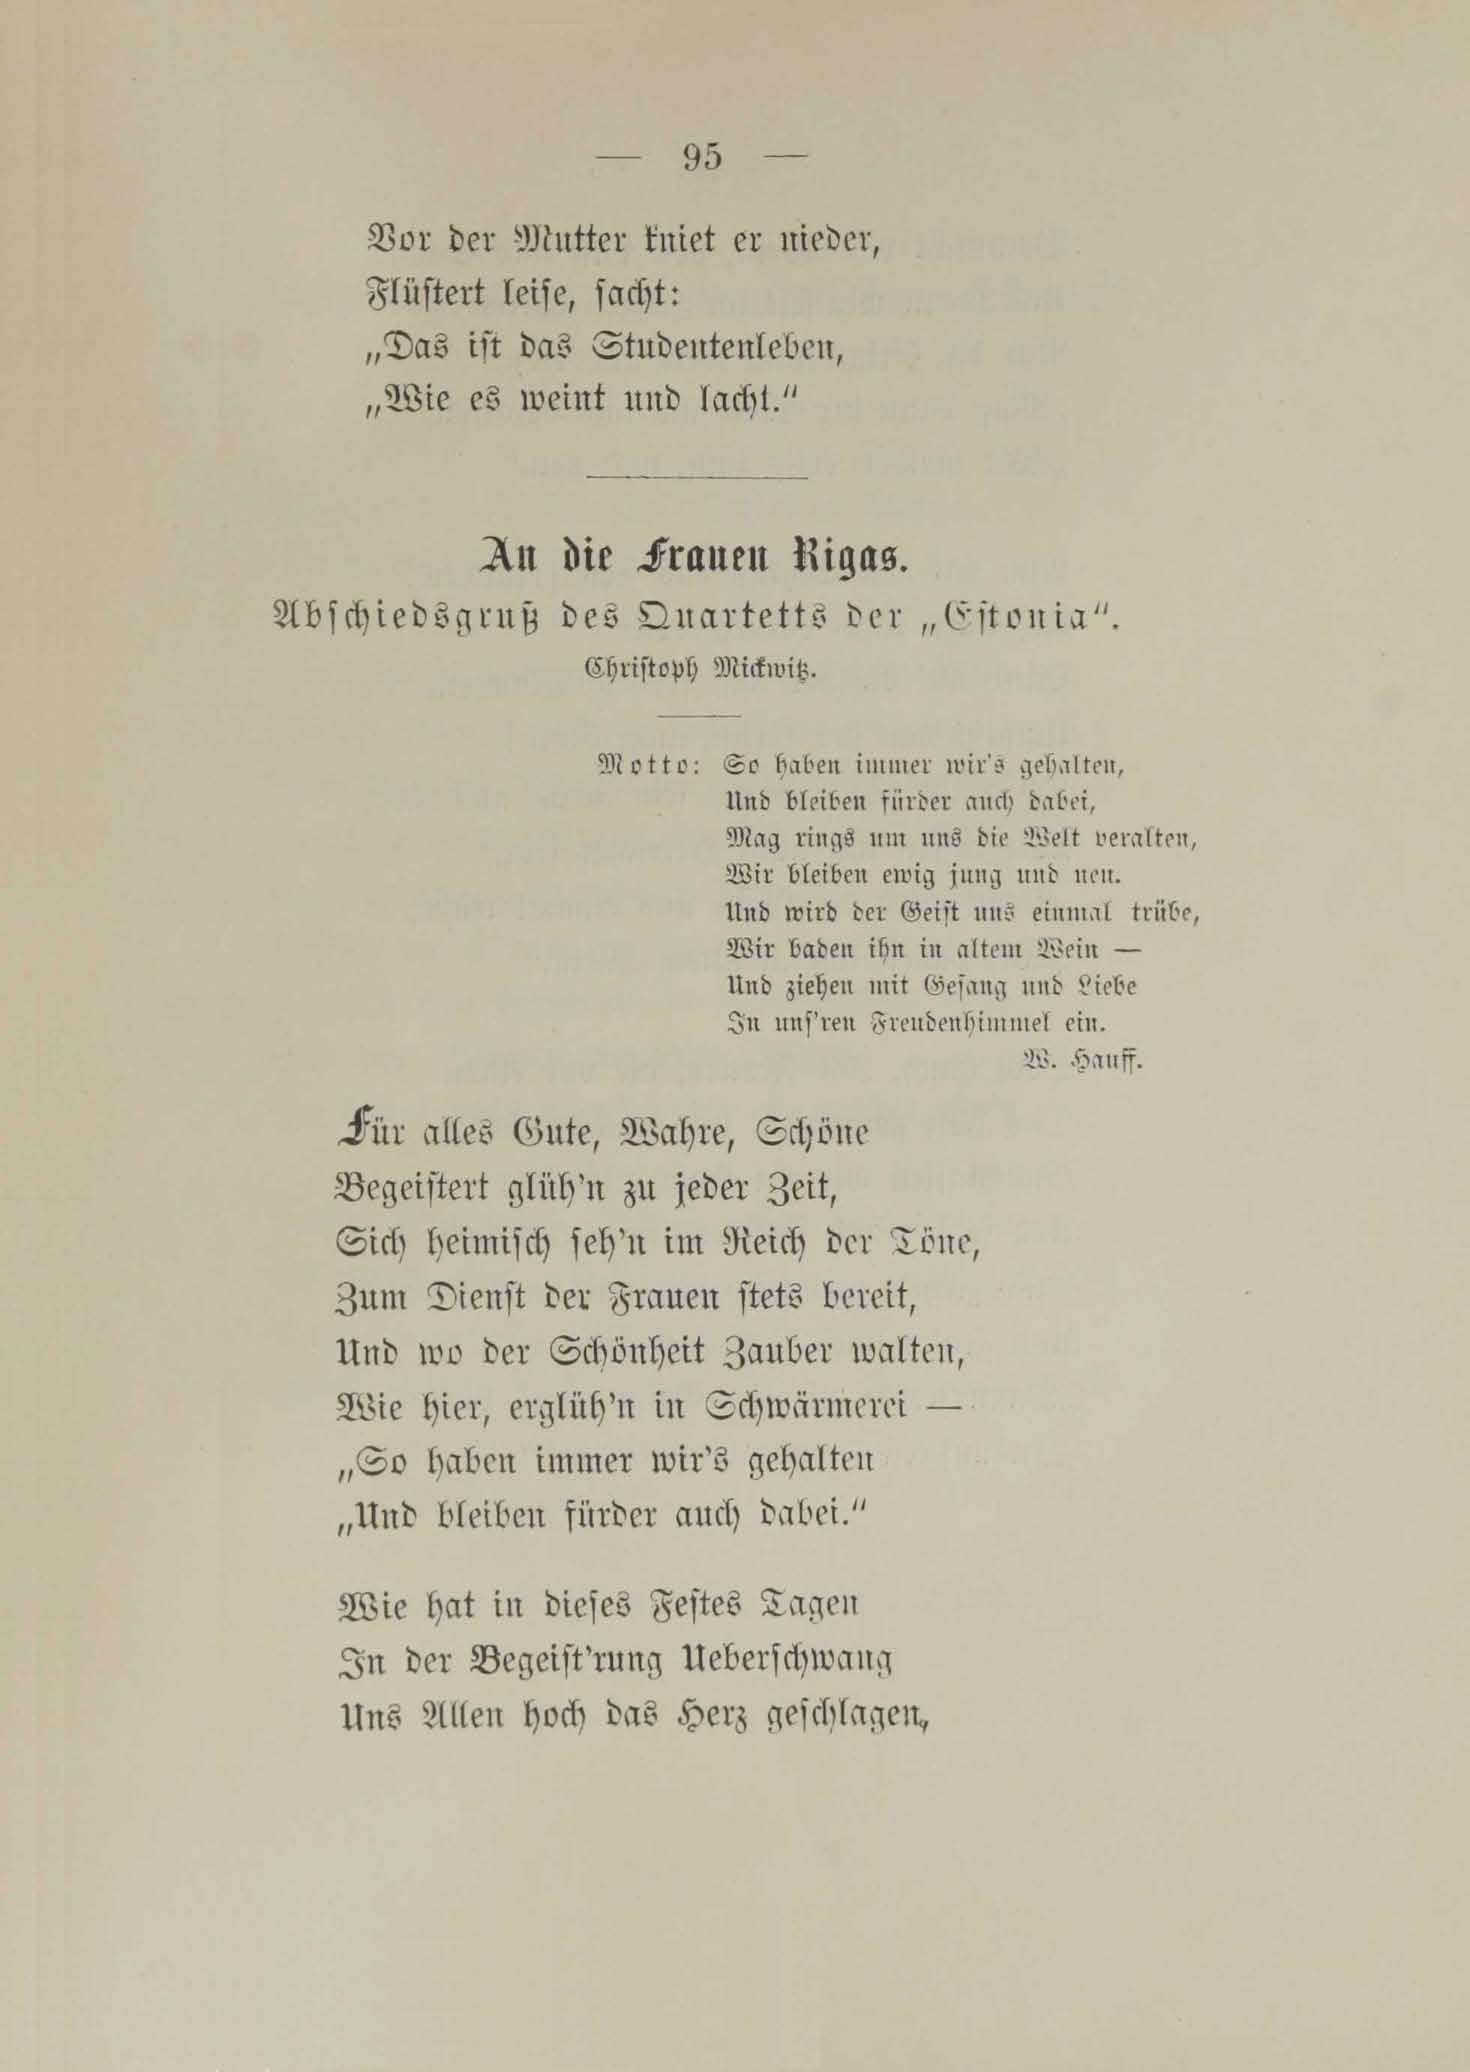 Estonen-Lieder (1890) | 91. (95) Main body of text